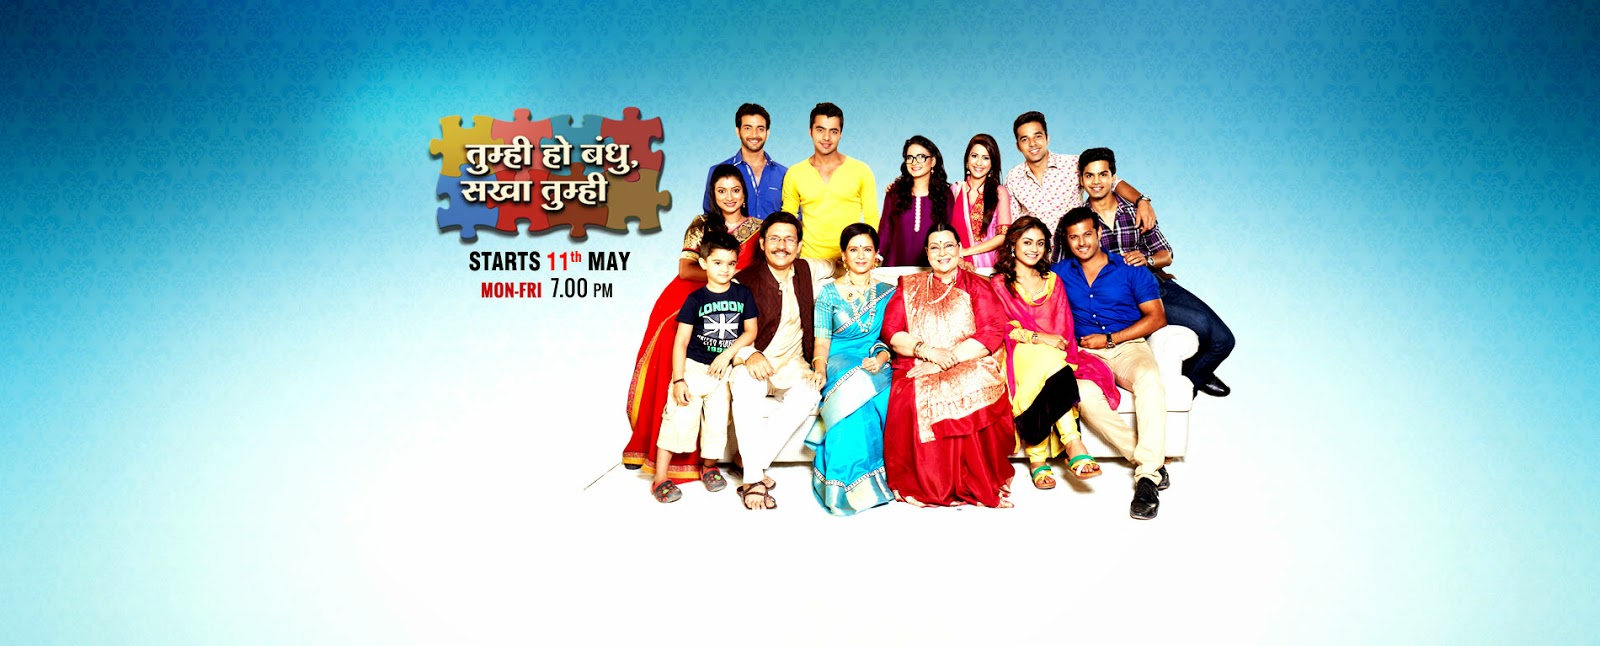 Tum Hi Ho Bandhu Sakha Tumhi tv serial on Zee TV cast and crew, story, timings, trp ratings, actress, pics, wallpaper